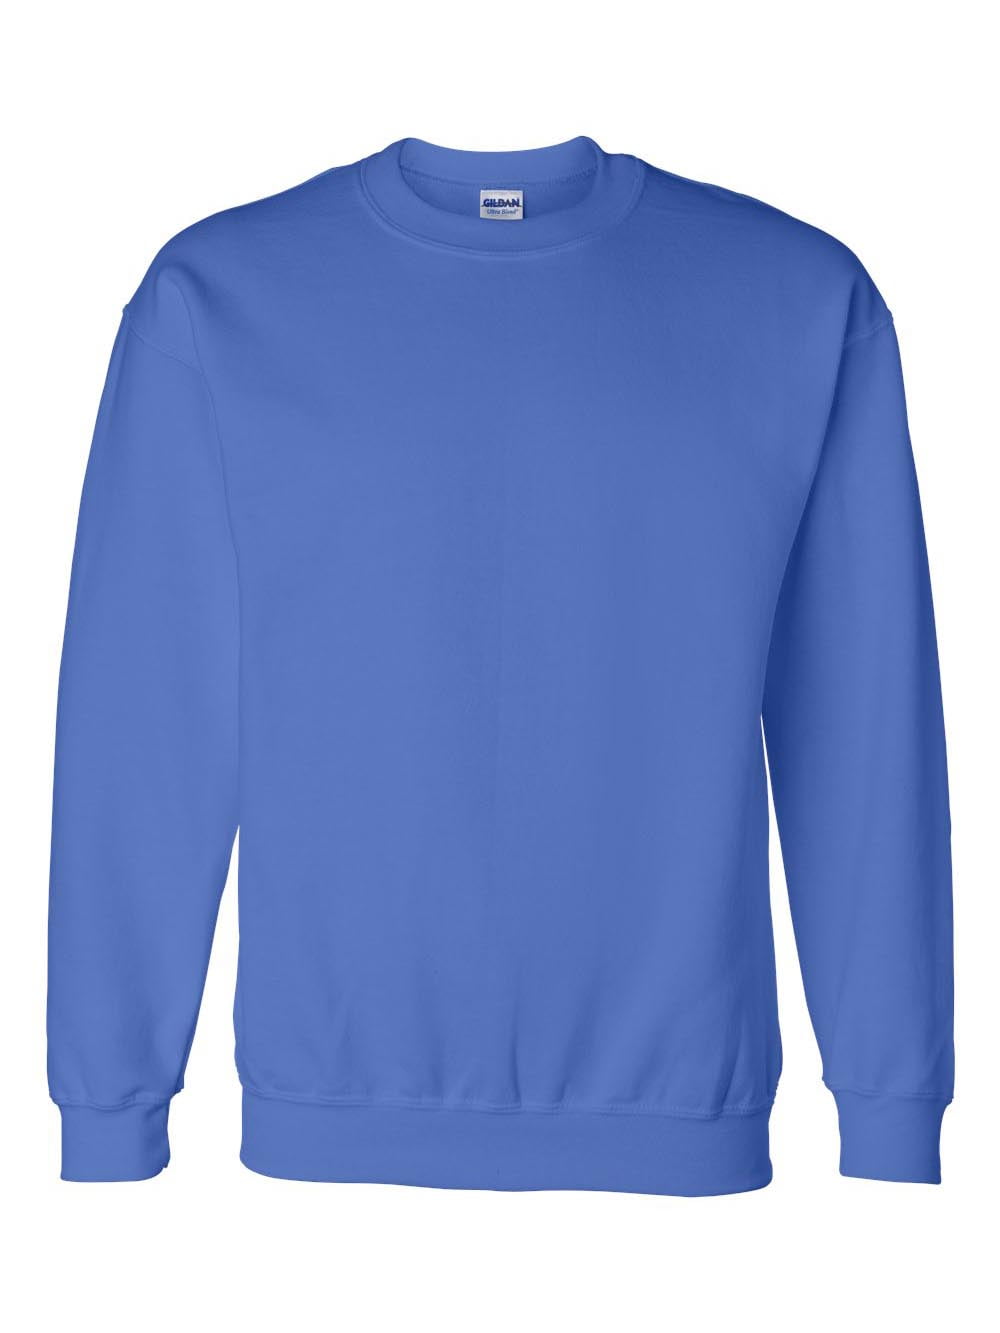 Gildan - DryBlend Crewneck Sweatshirt - 12000 - Walmart.com